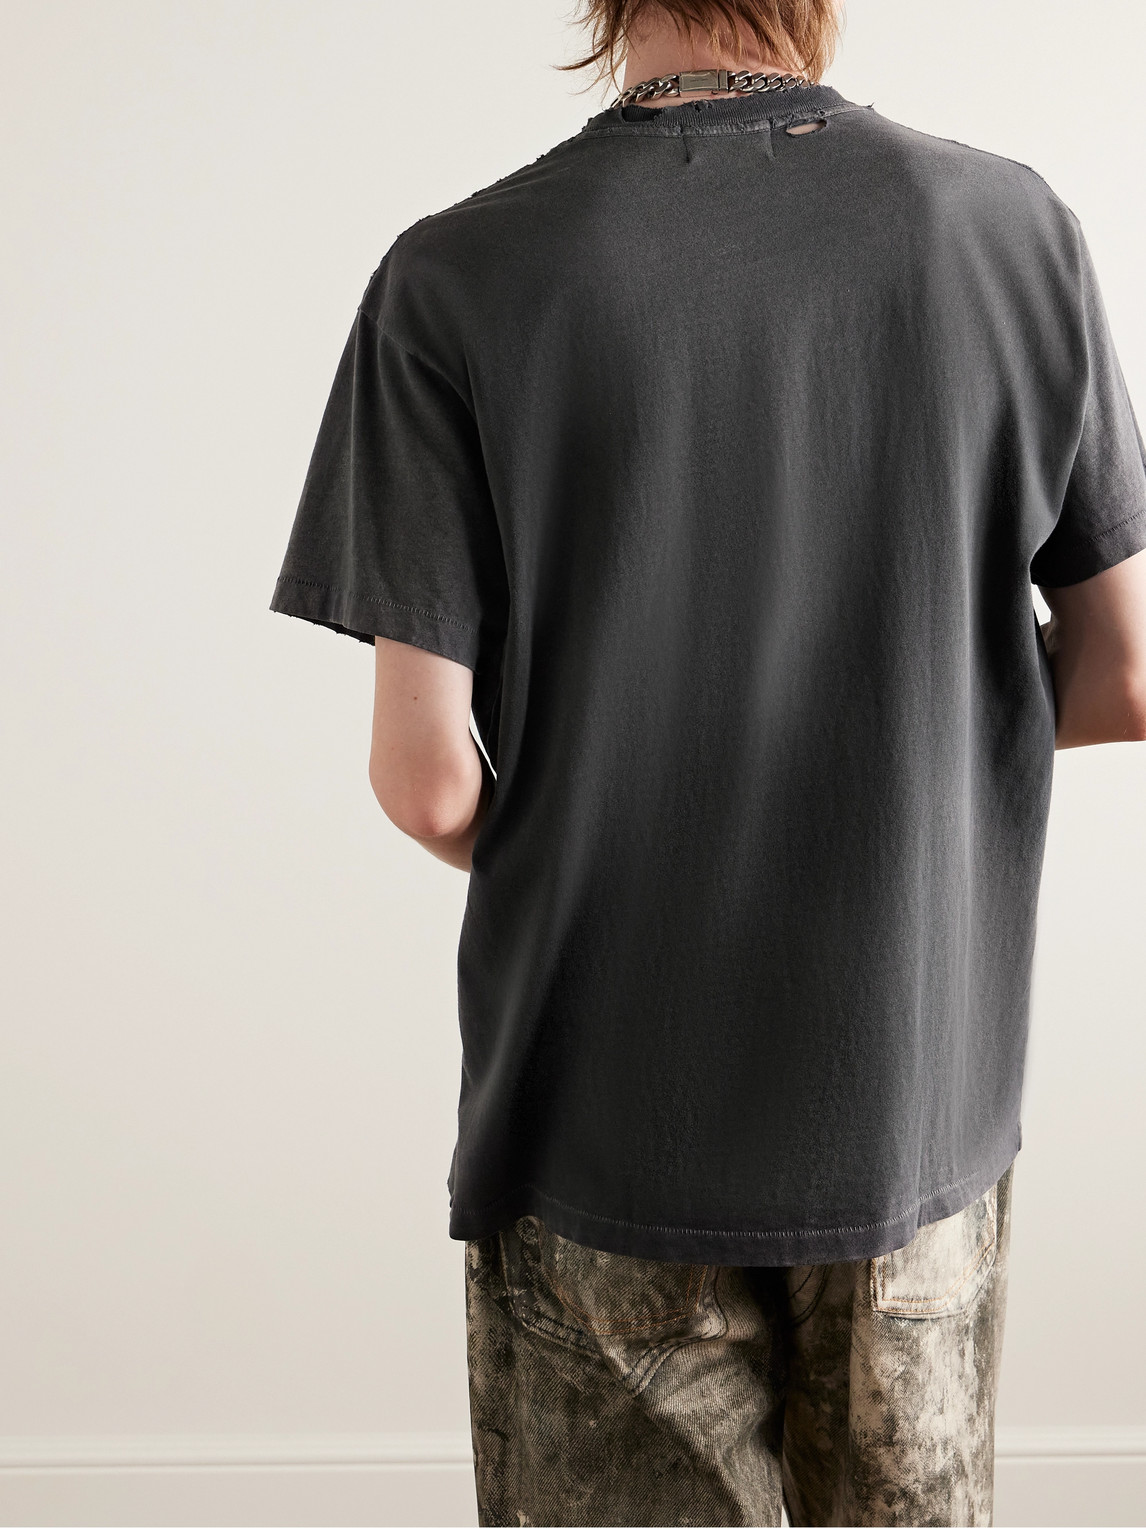 Shop Enfants Riches Deprimes Thrashed Distressed Logo-print Cotton-jersey T-shirt In Gray